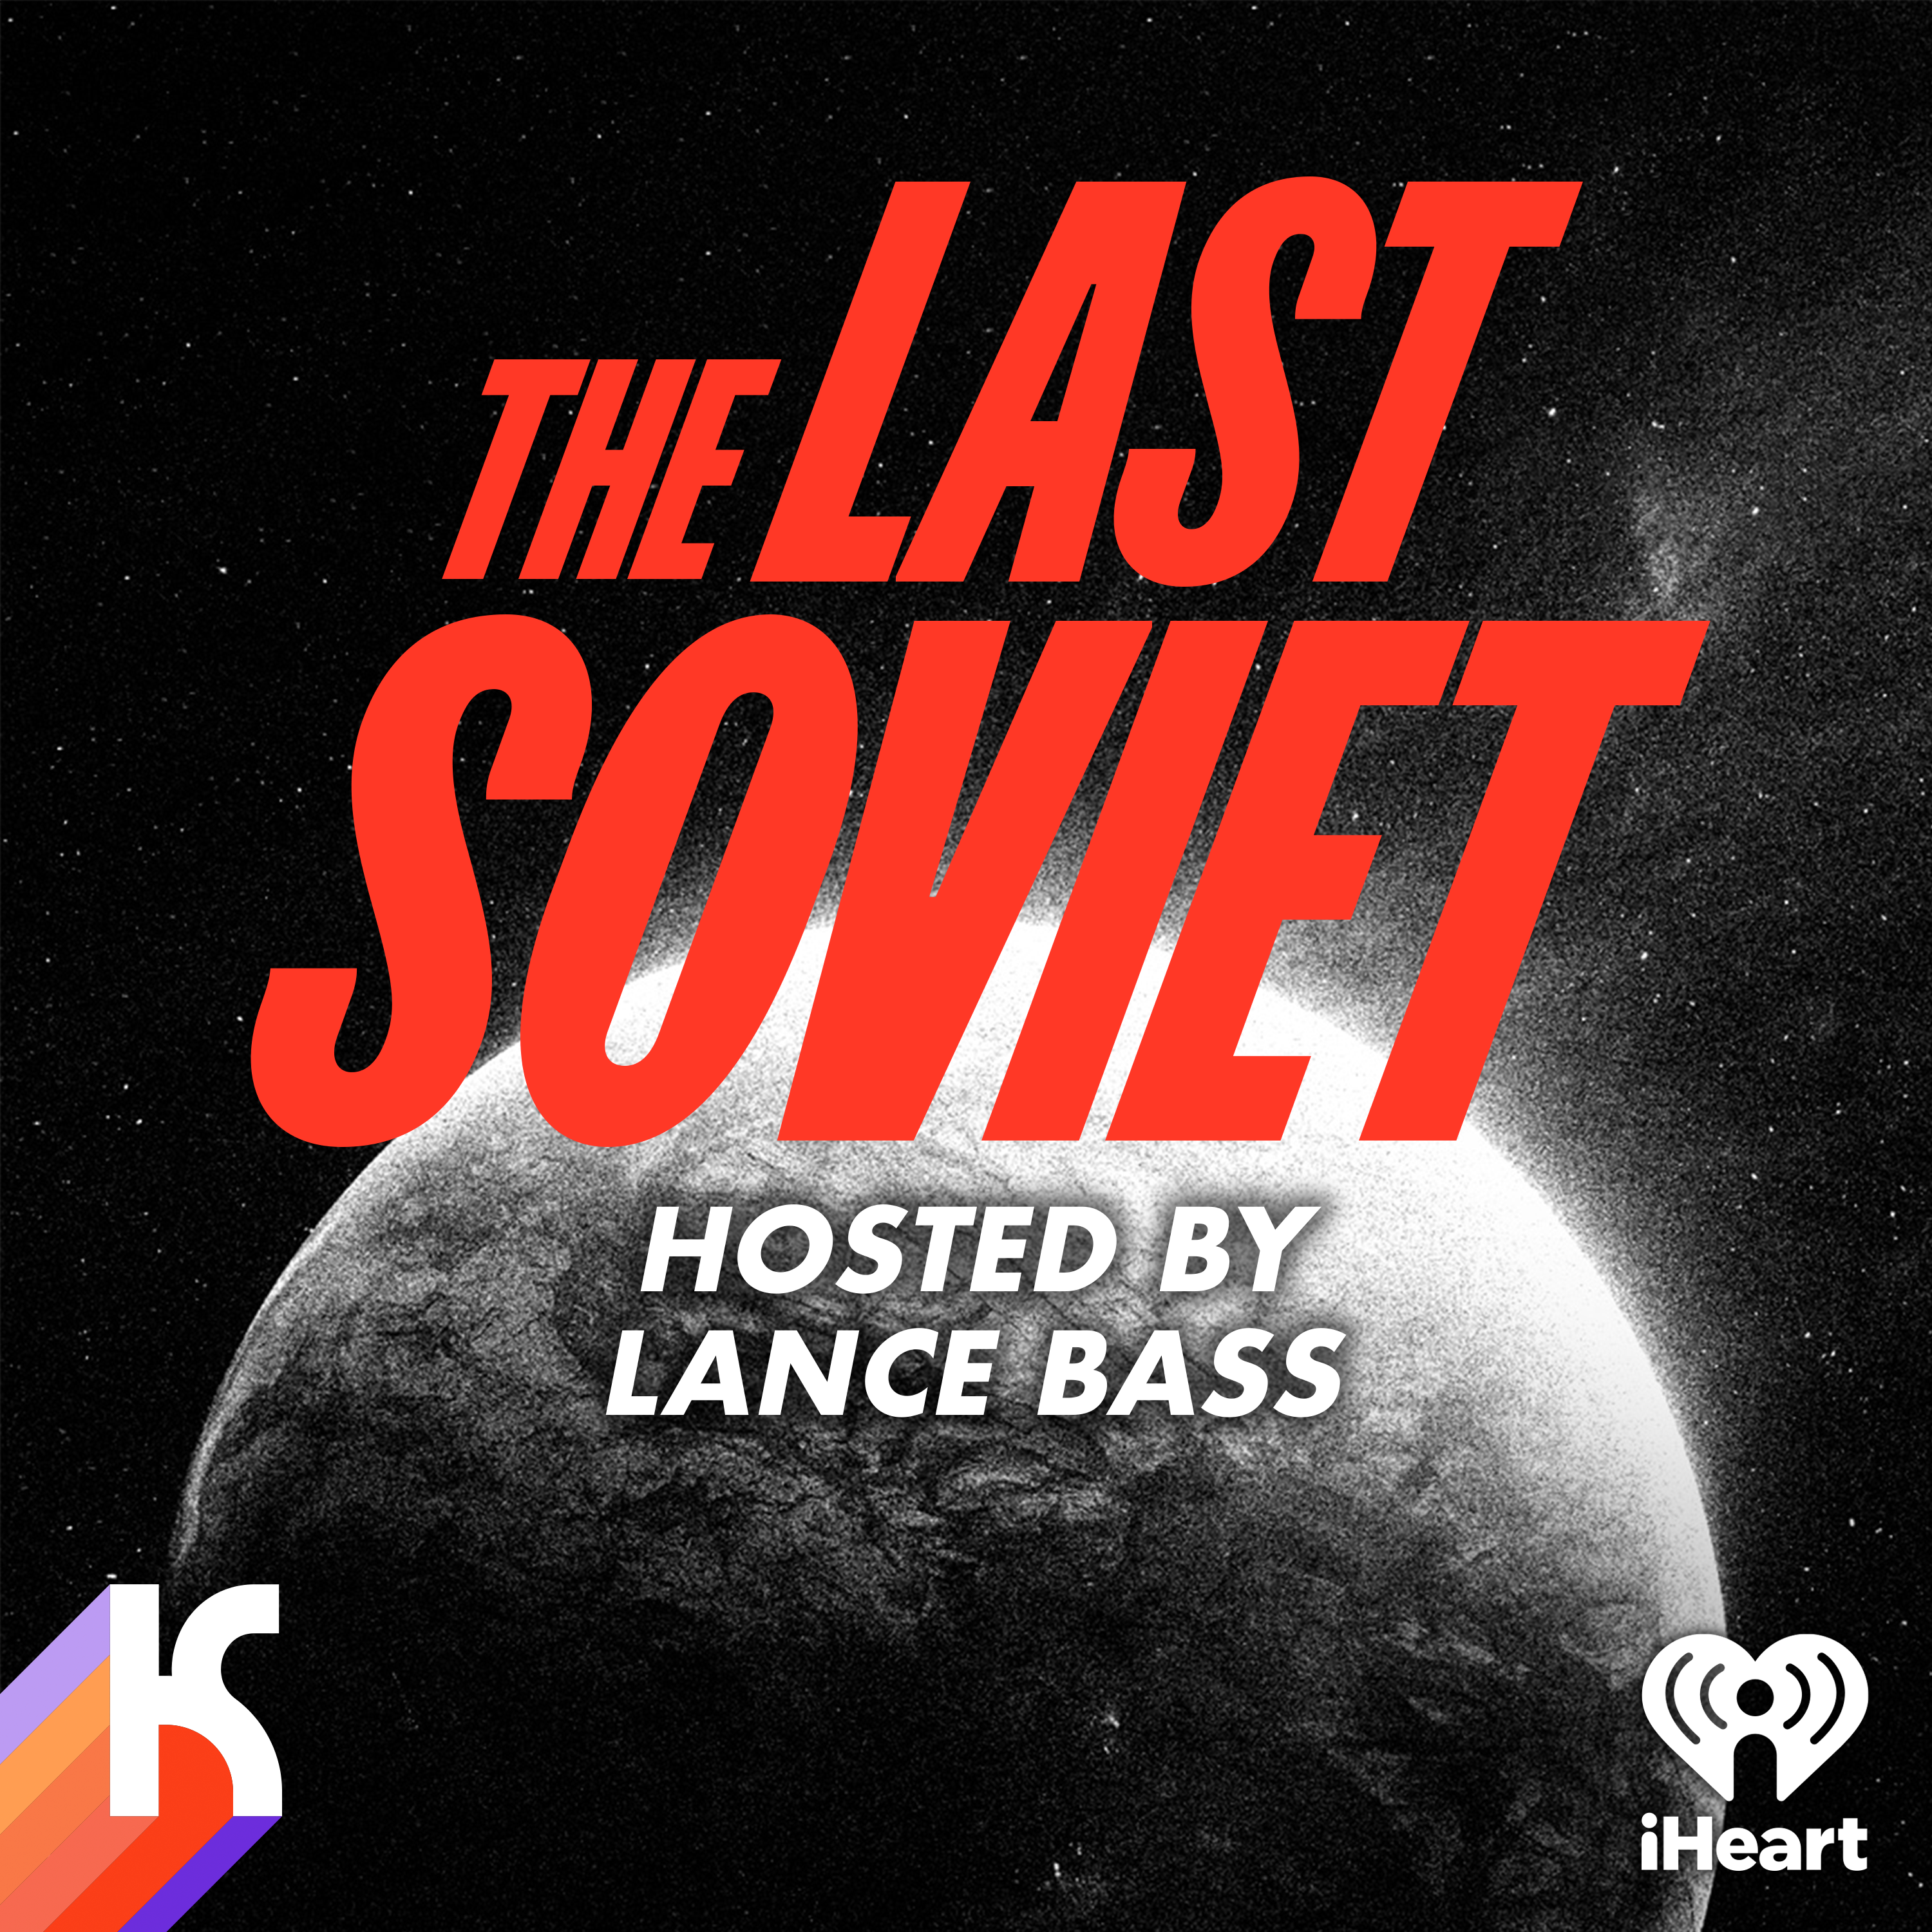 The Last Soviet podcast show image